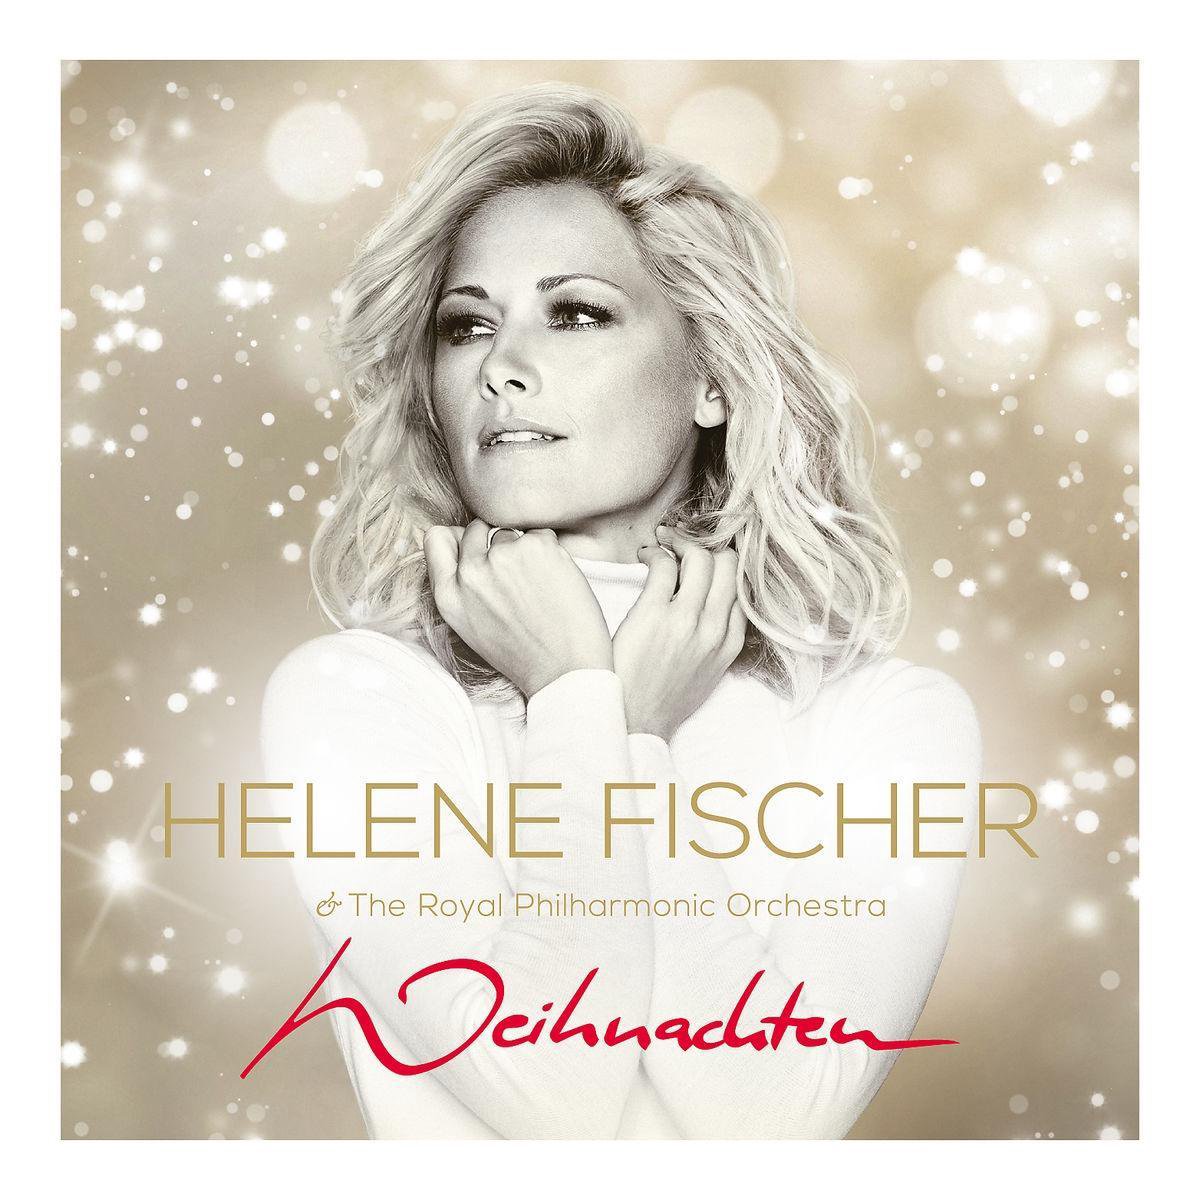 Helene Fischer - Merry Christmas - Weihnachten (Deluxe Edition) (2CD) (2015)